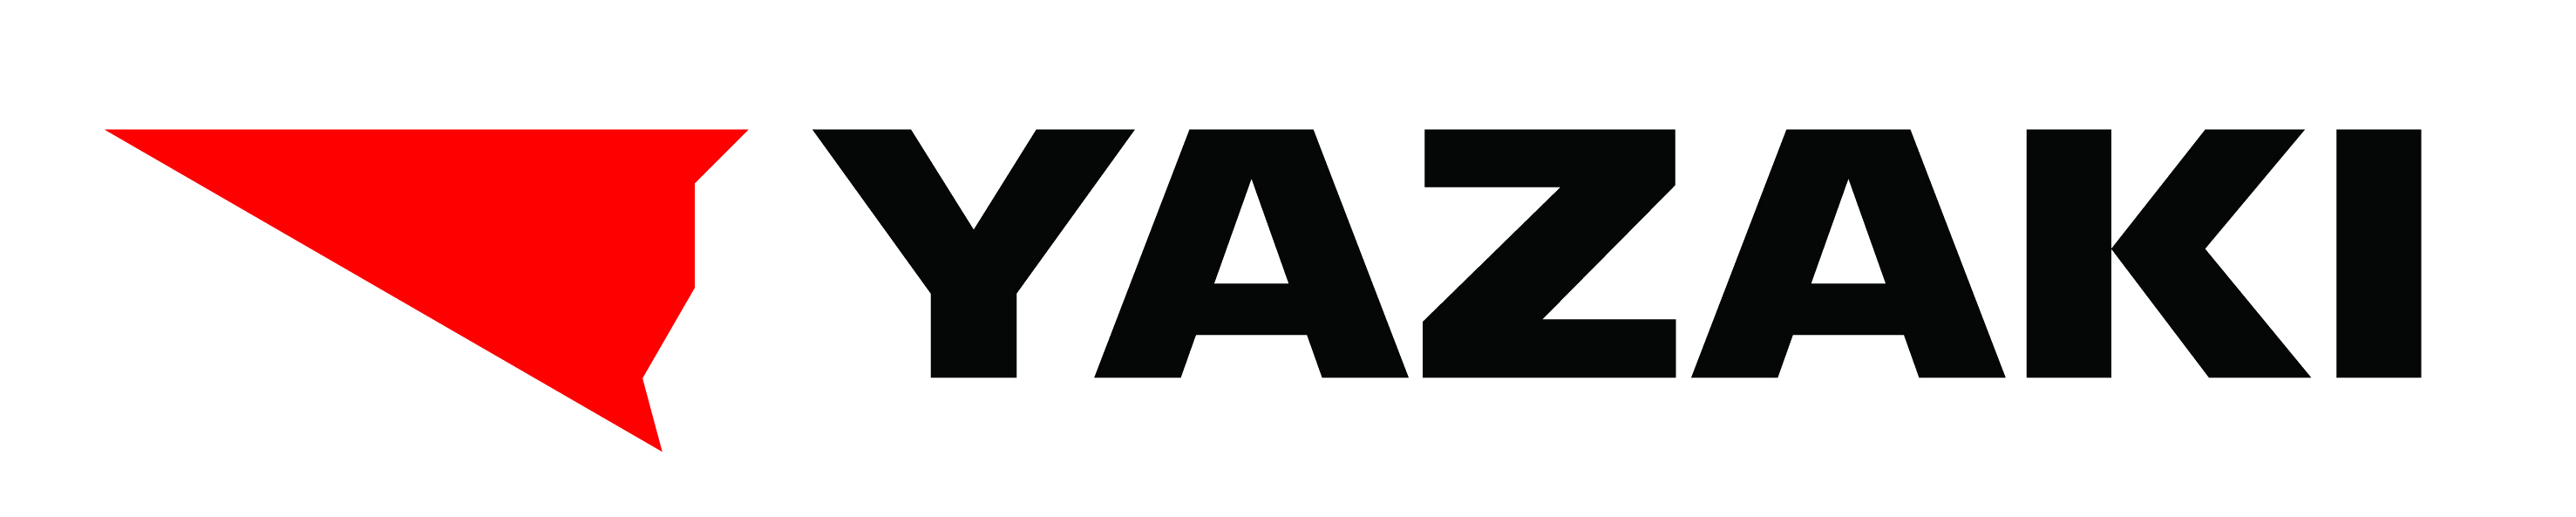 #InternYazaki Social Campaign - Logo - https://s39939.pcdn.co/wp-content/uploads/2018/11/User-Generated-Content.jpg